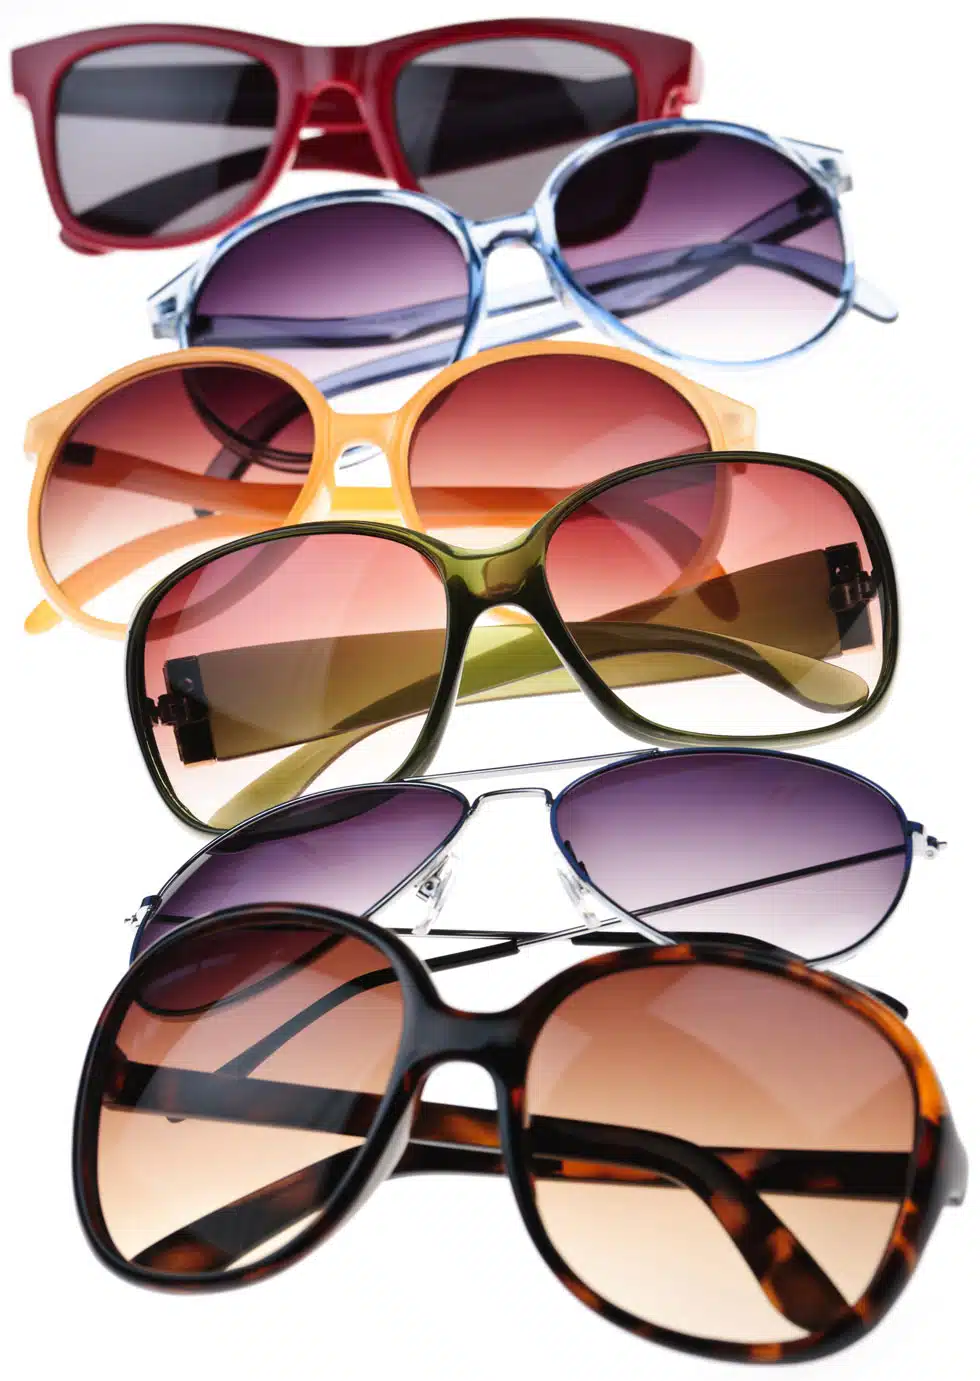 Sunglasses Matsuda 2821 Adjustable Temple Length